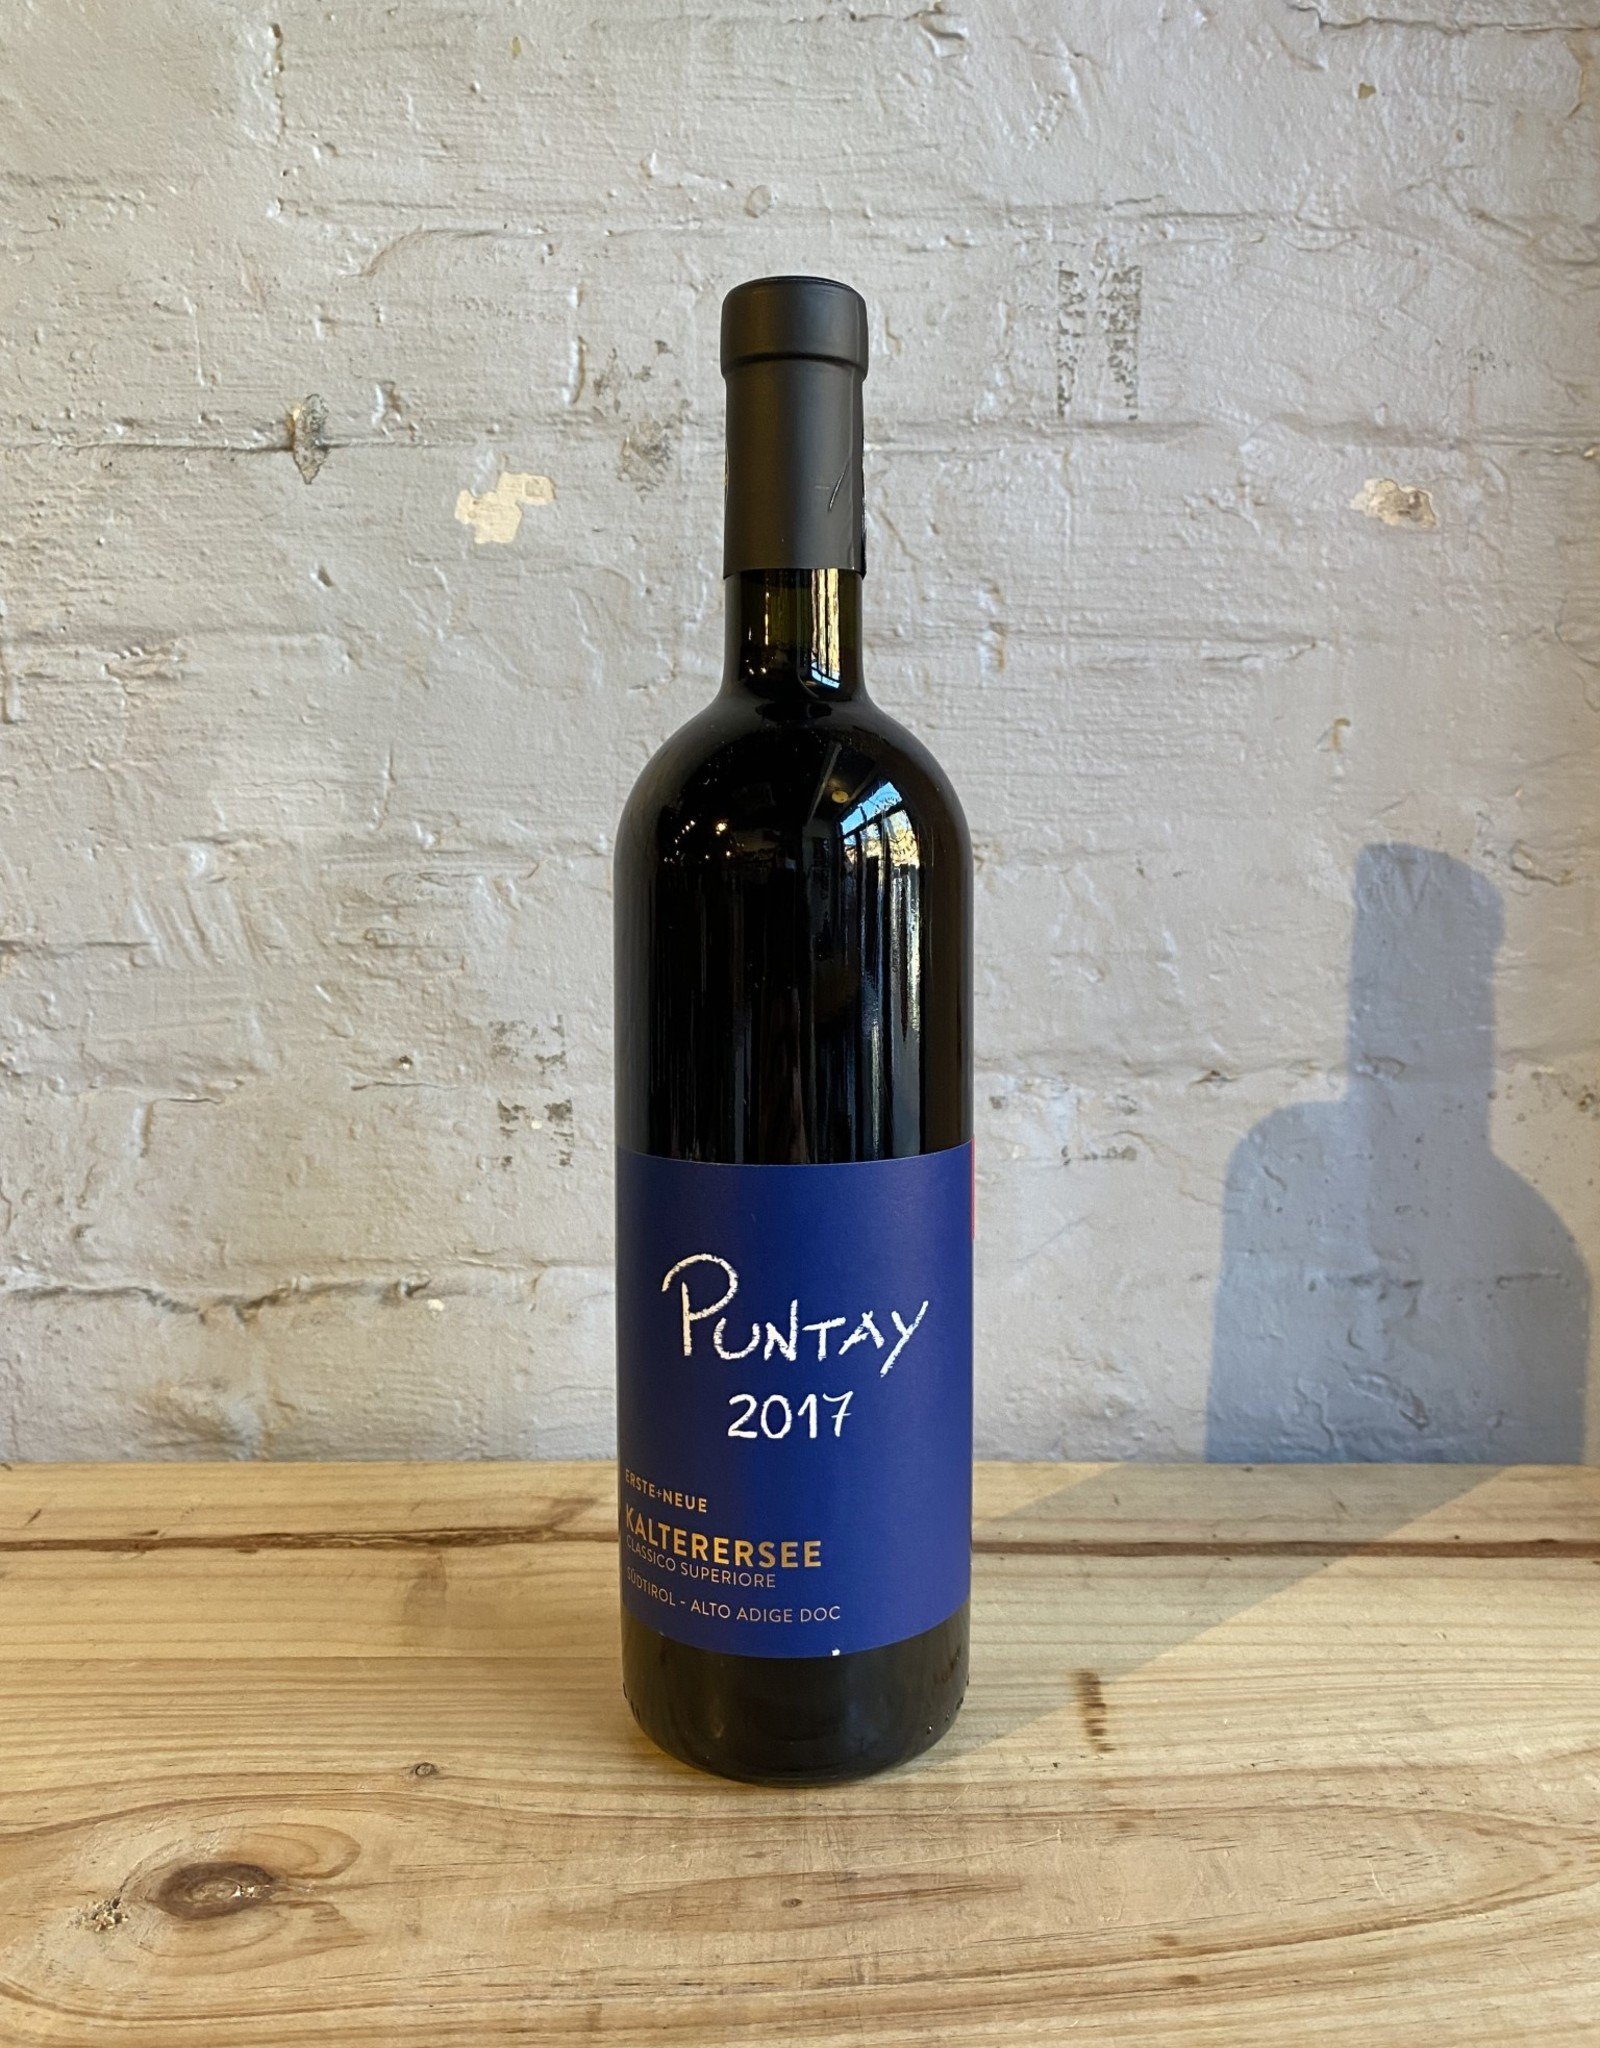 Wine 2017 Erste & Neue Puntay, Kalterersee Auslese Superiore - Trentino Alto Adige, Italy